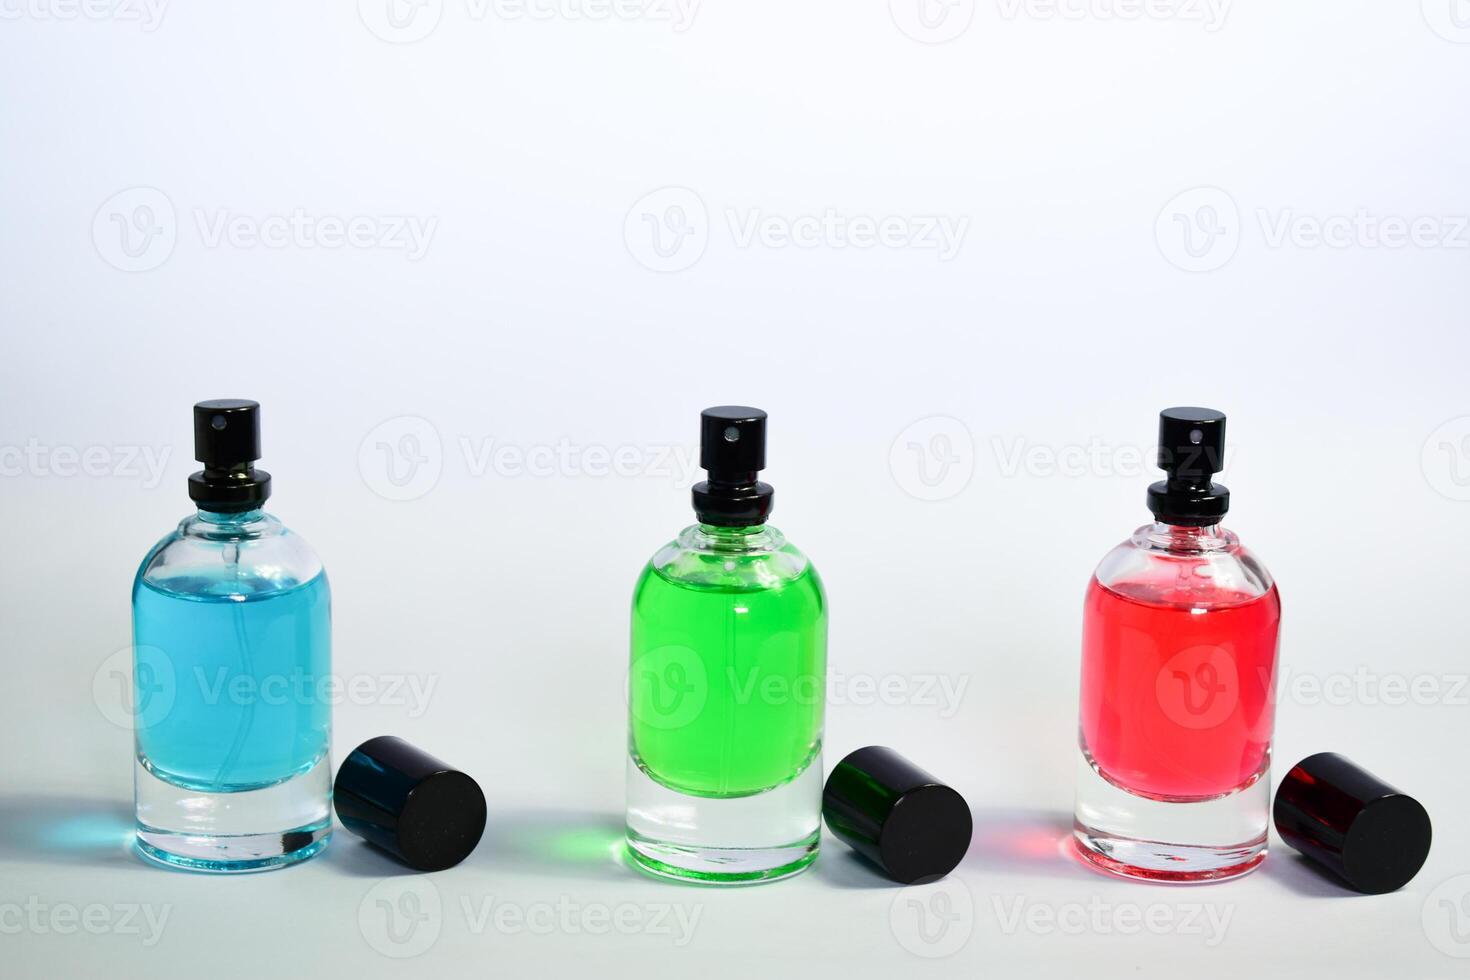 multicolorido garrafa perfume conjunto foto